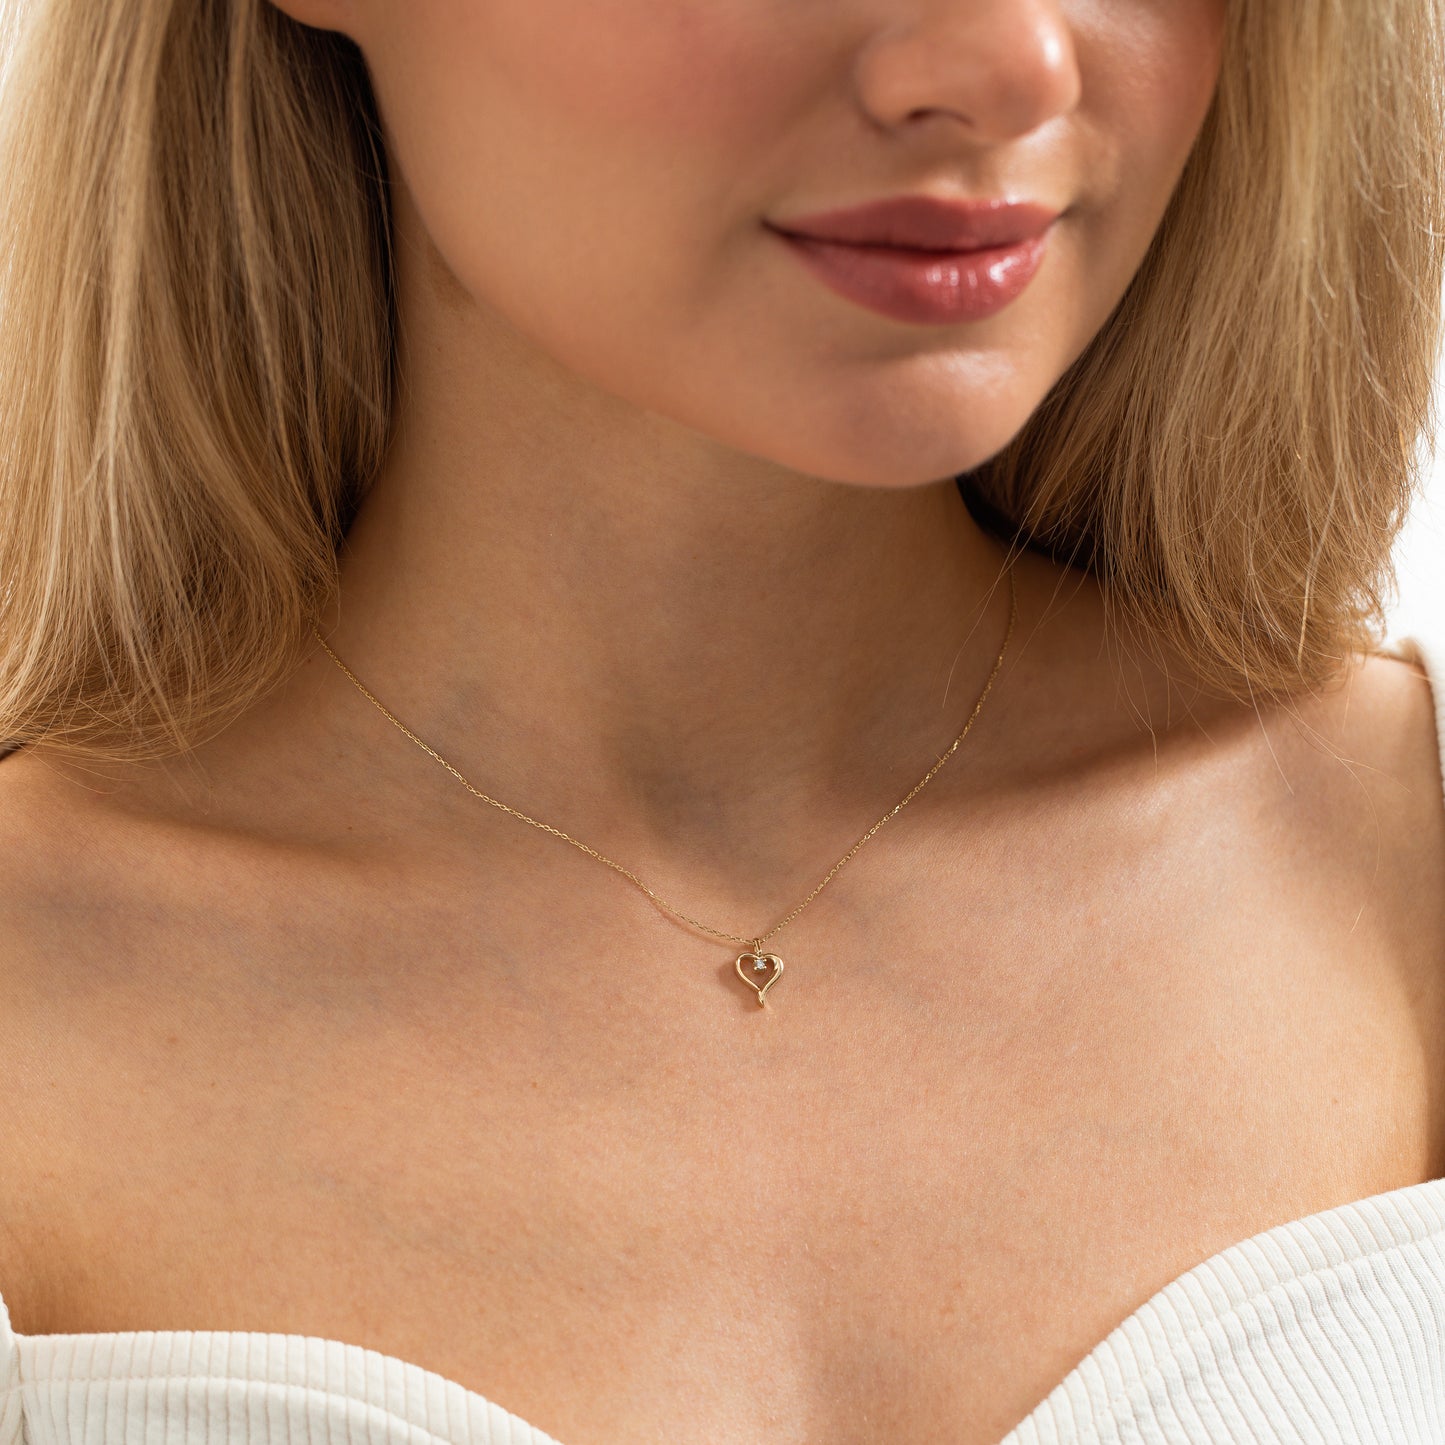 Diamond Dainty Heart Necklace